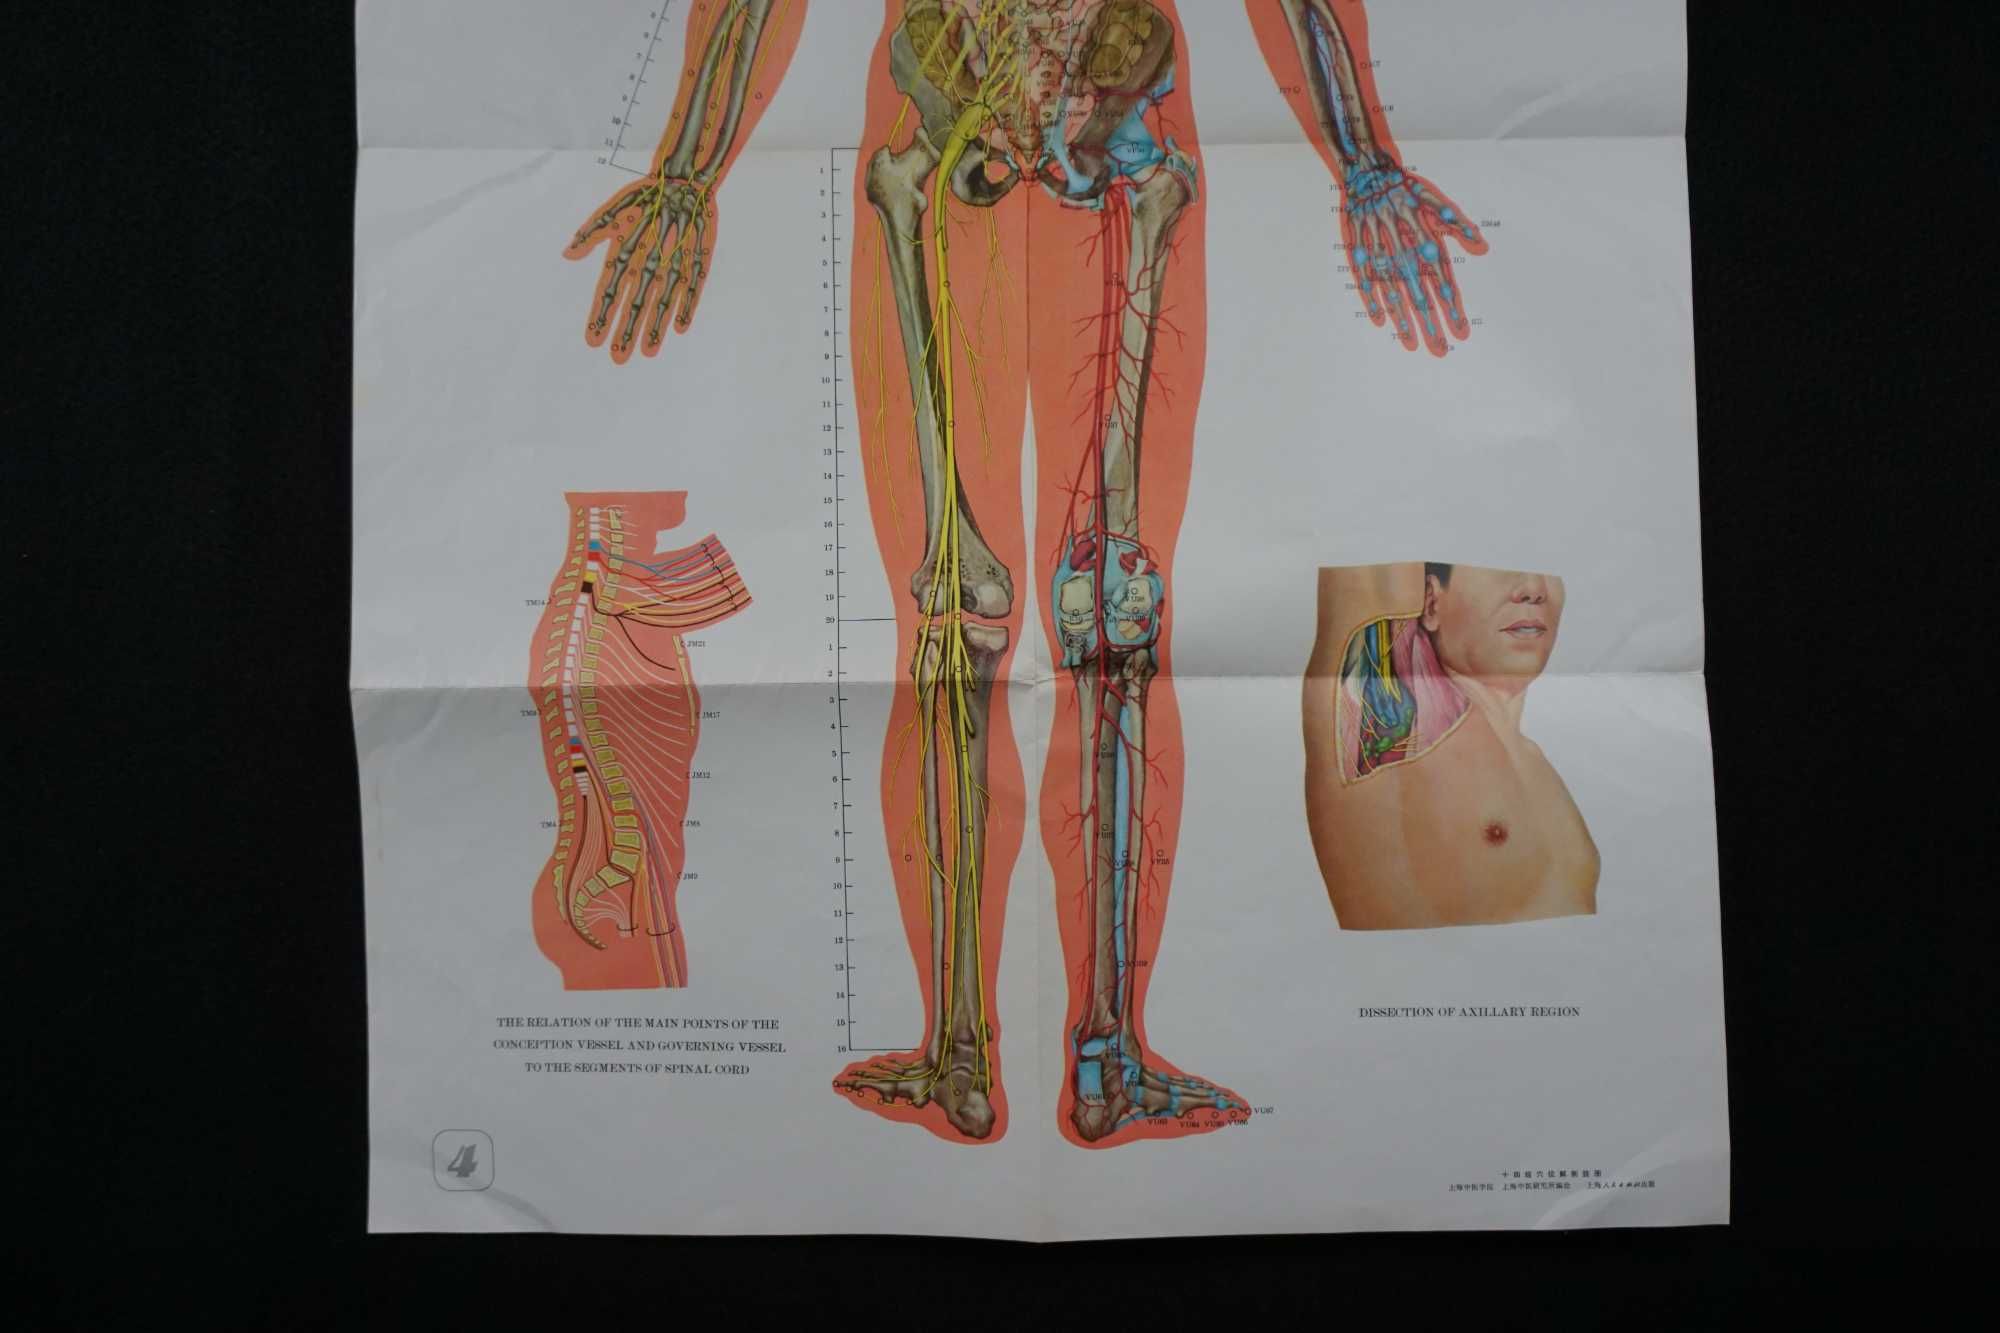 Tablica plansza medyczna plakat akupunktura 106cm x 66cm DUŻY vintage